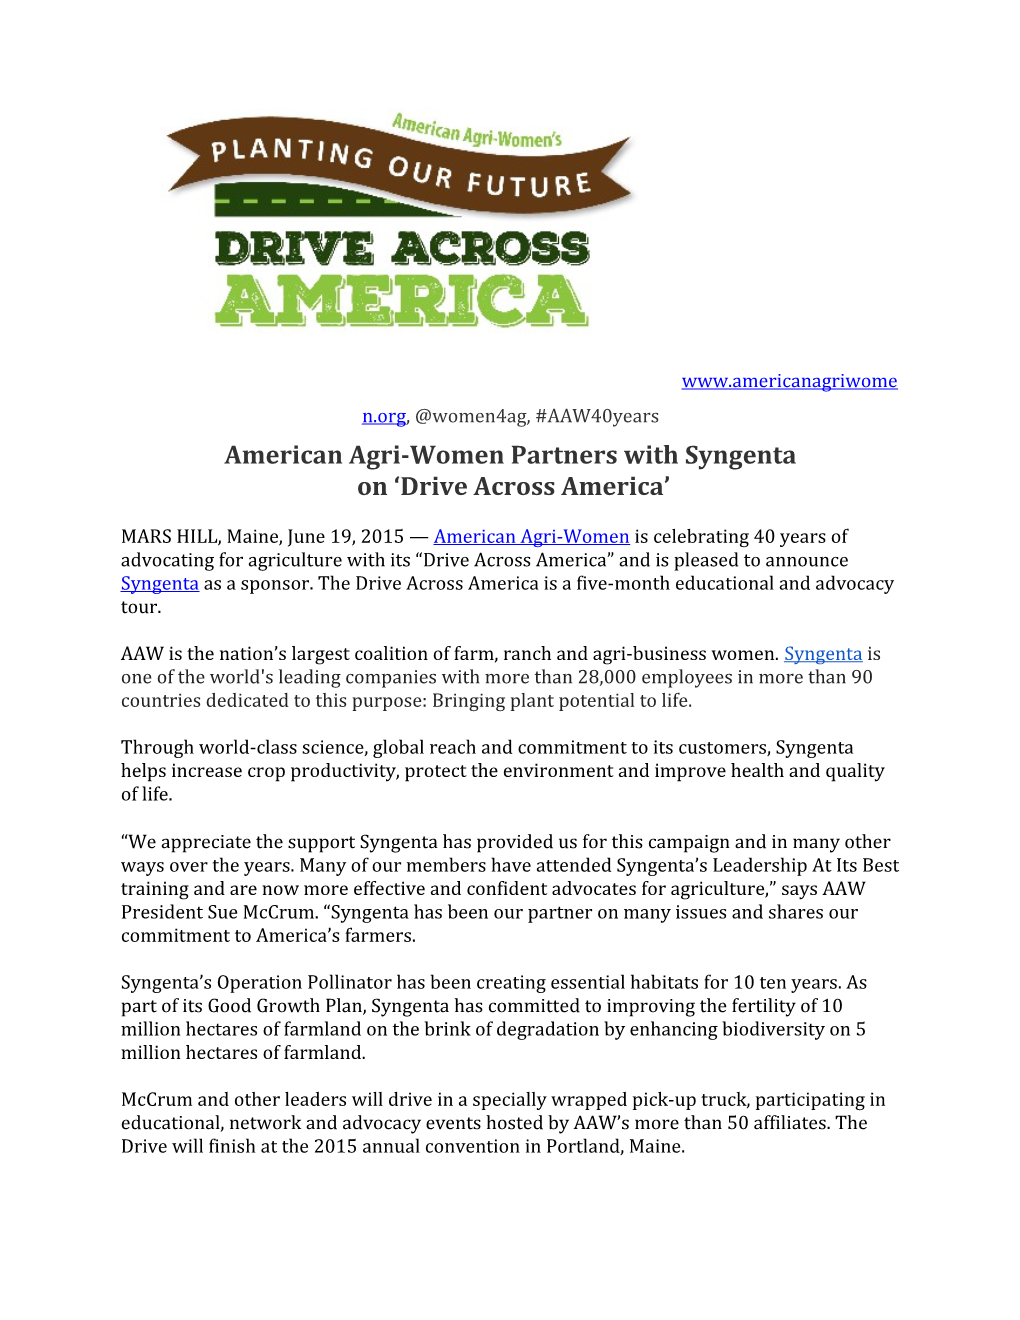 American Agri-Women Partners Withsyngenta on Drive Across America